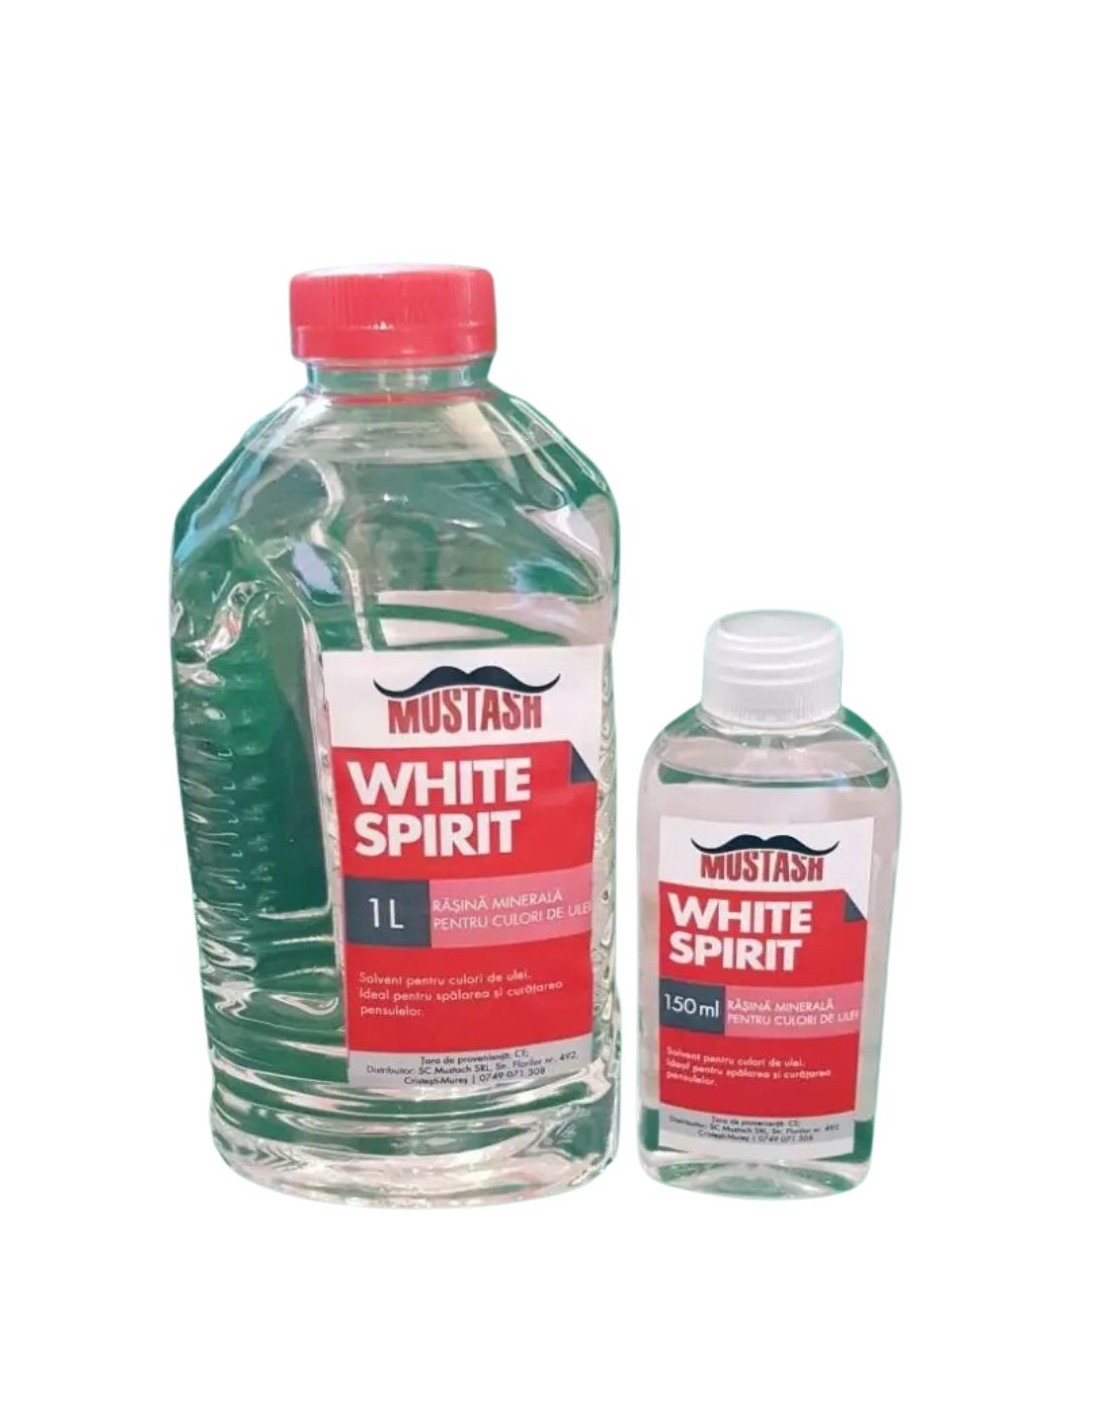 White spirit organic solvent